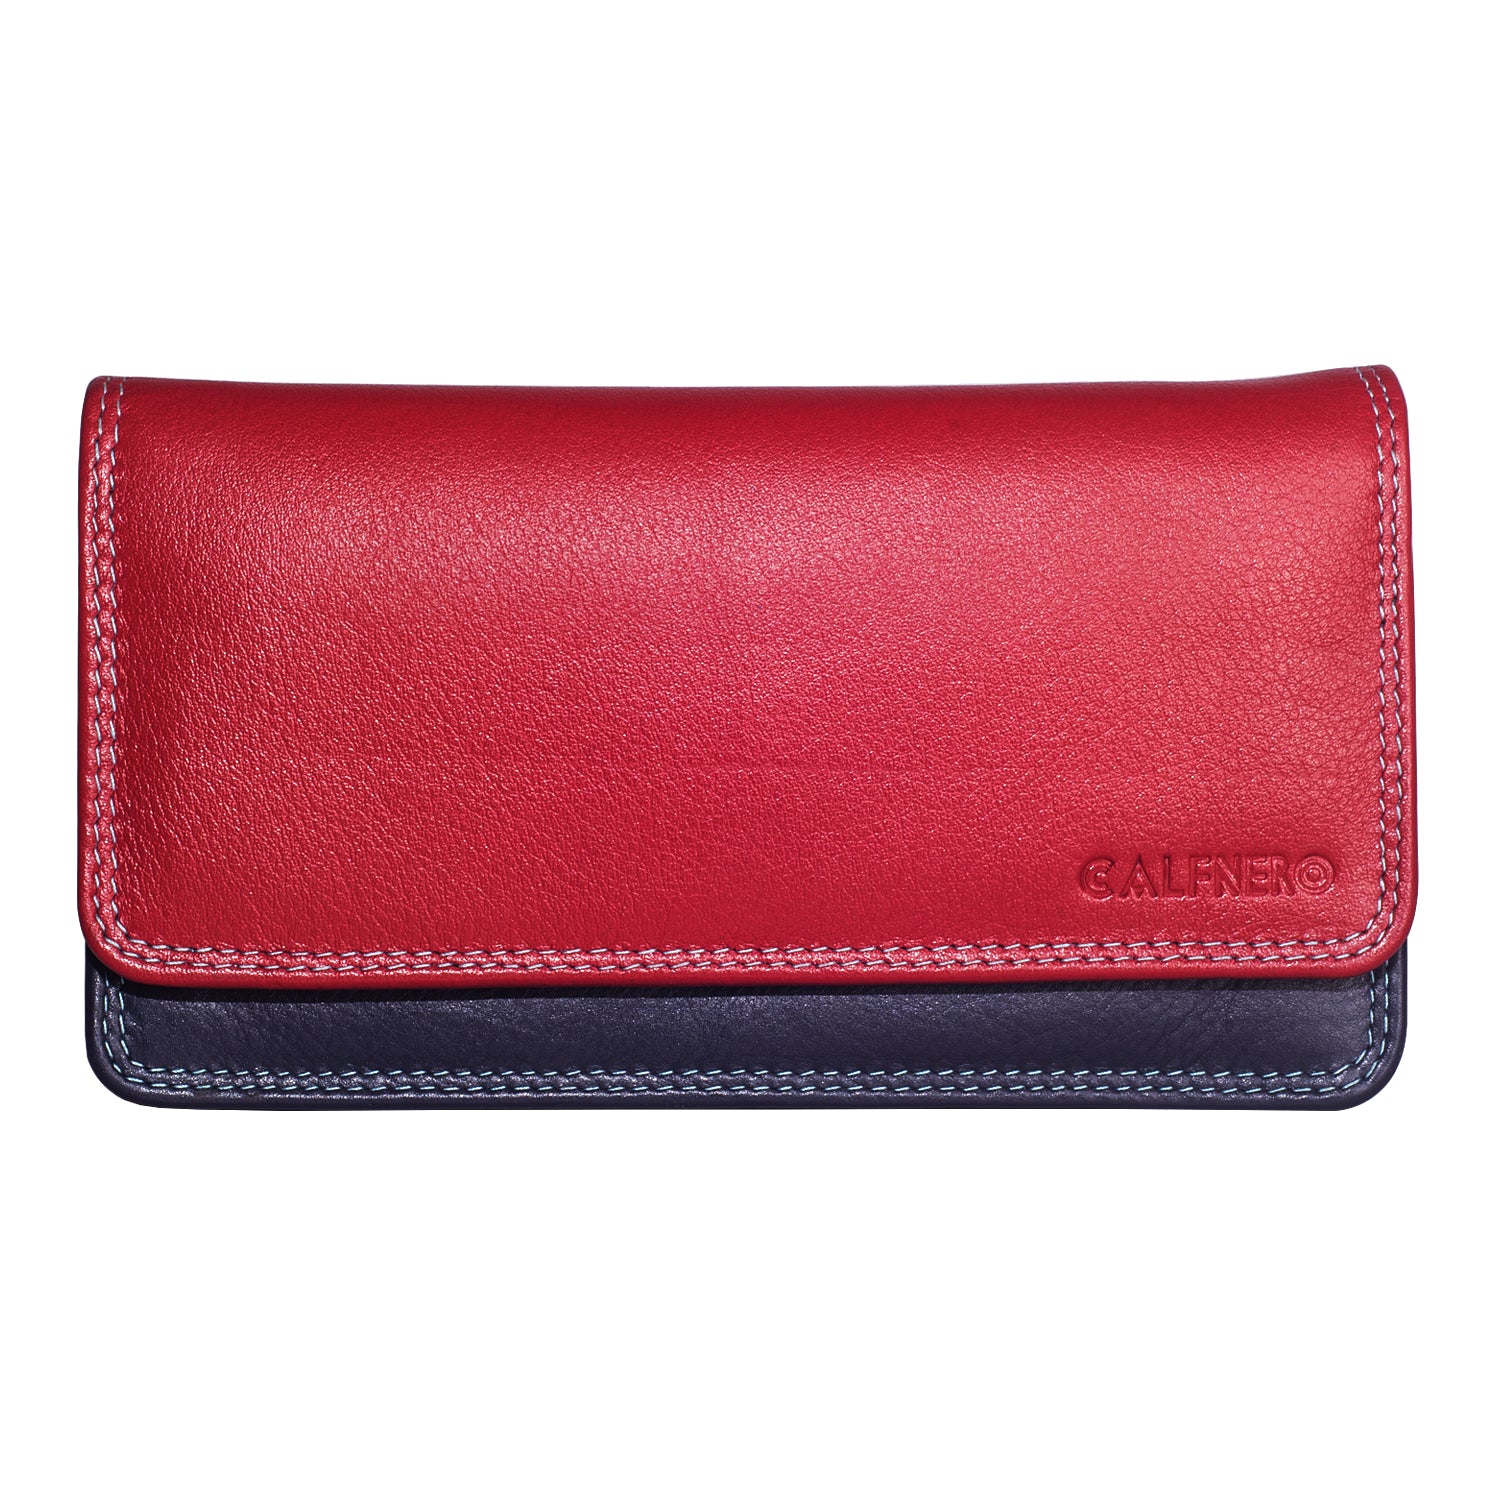 Khadim Cherry Red Zip Around Wallet for Women (6740265)